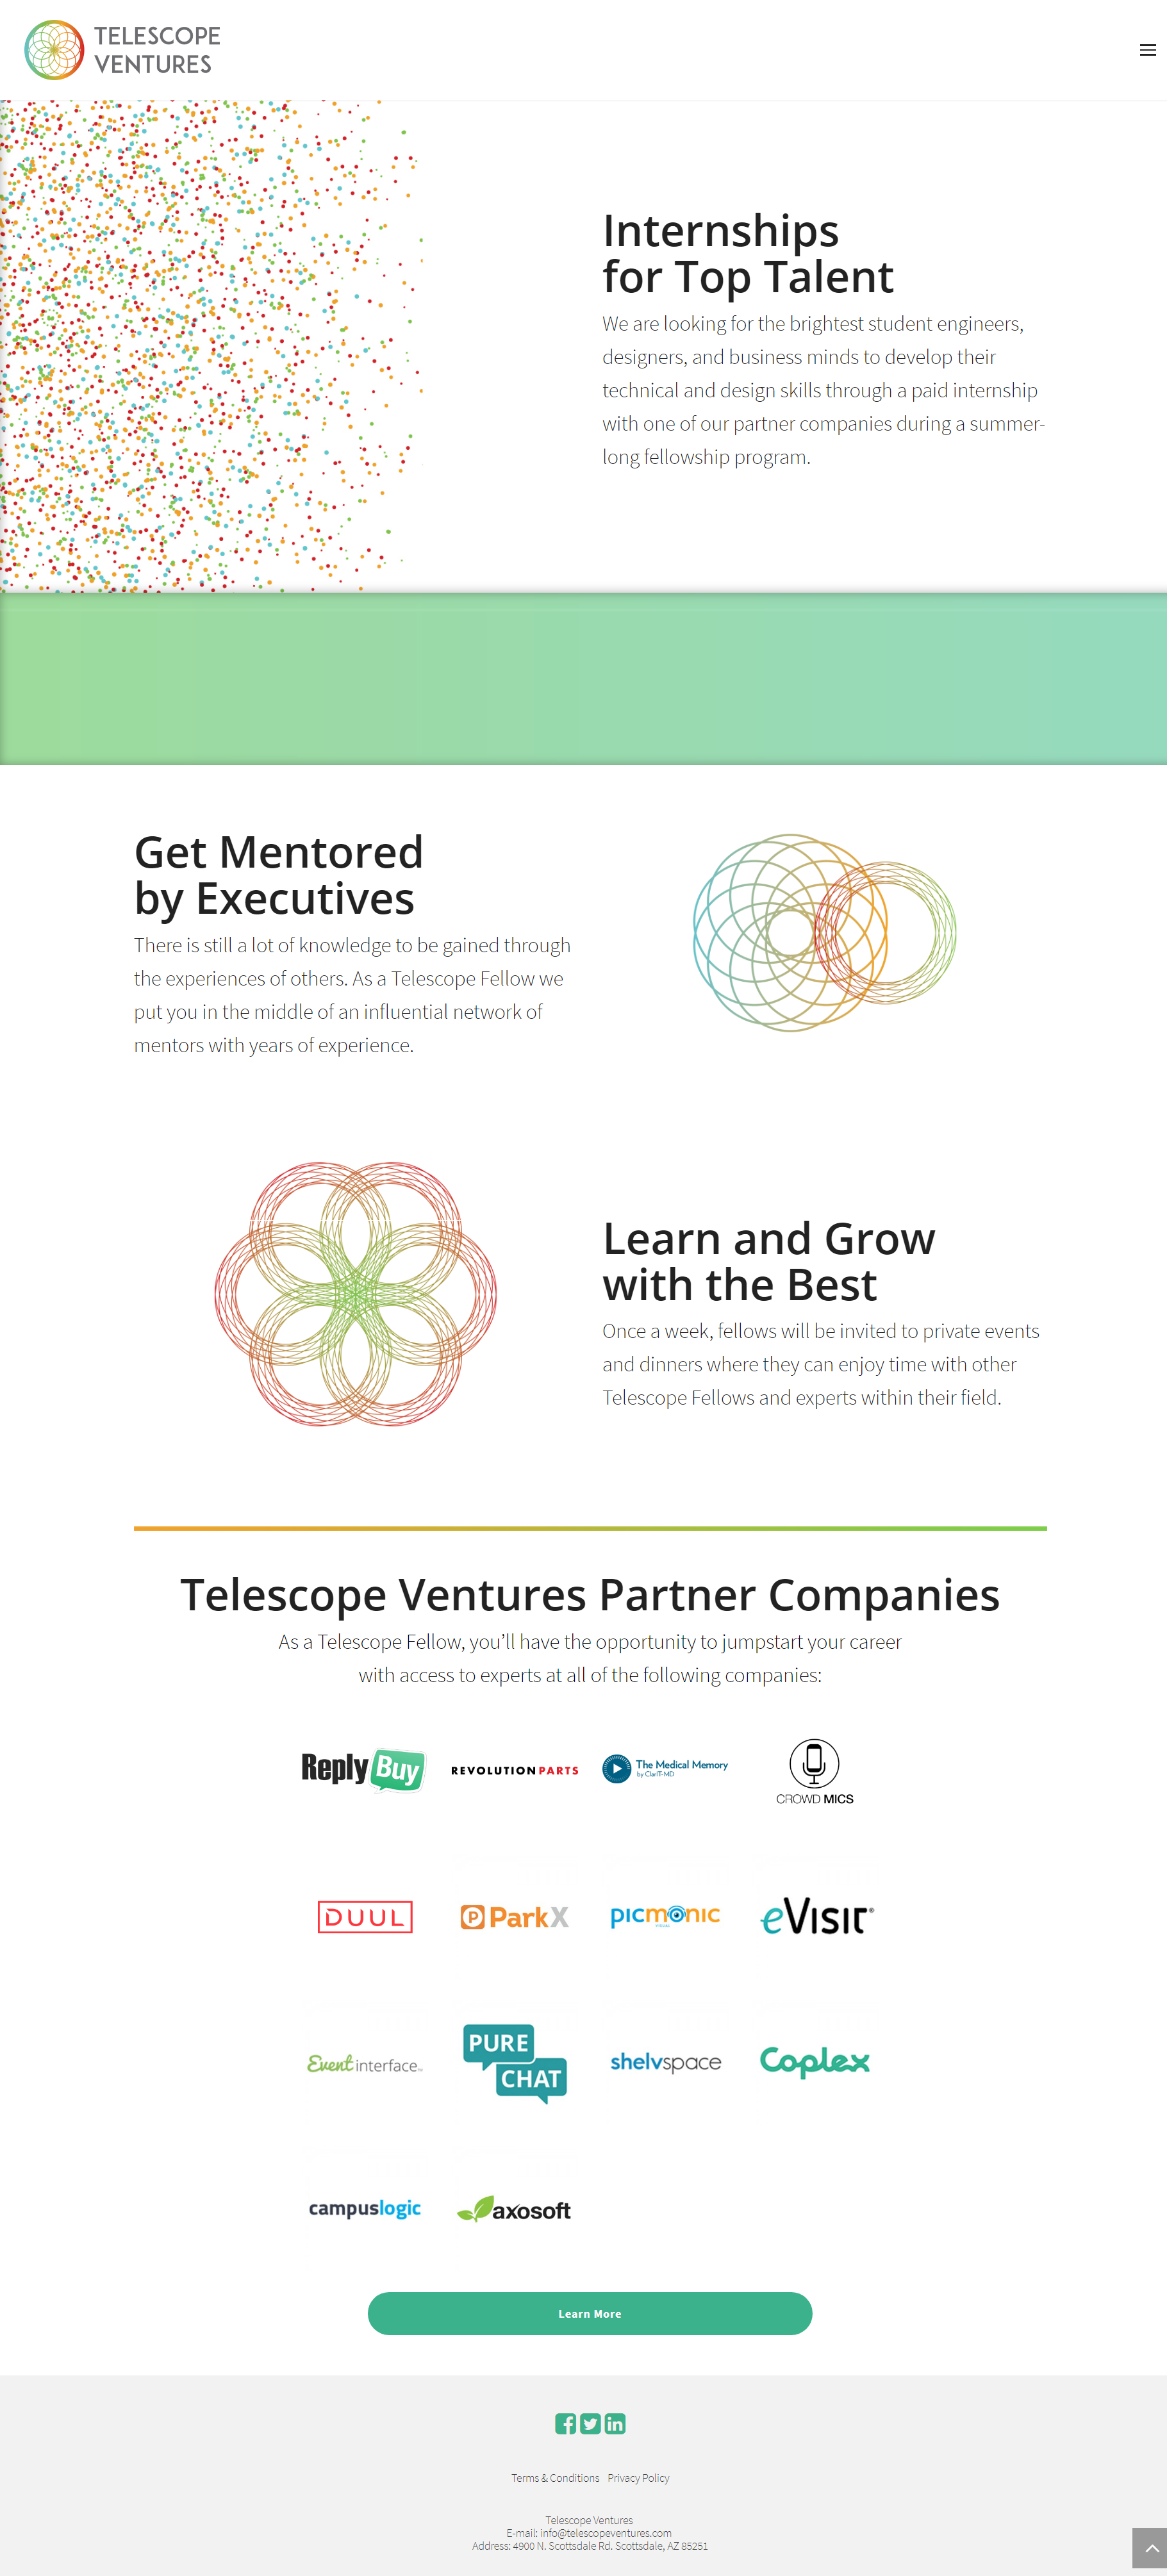 Telescope Ventures Build an entrepreneurial culture